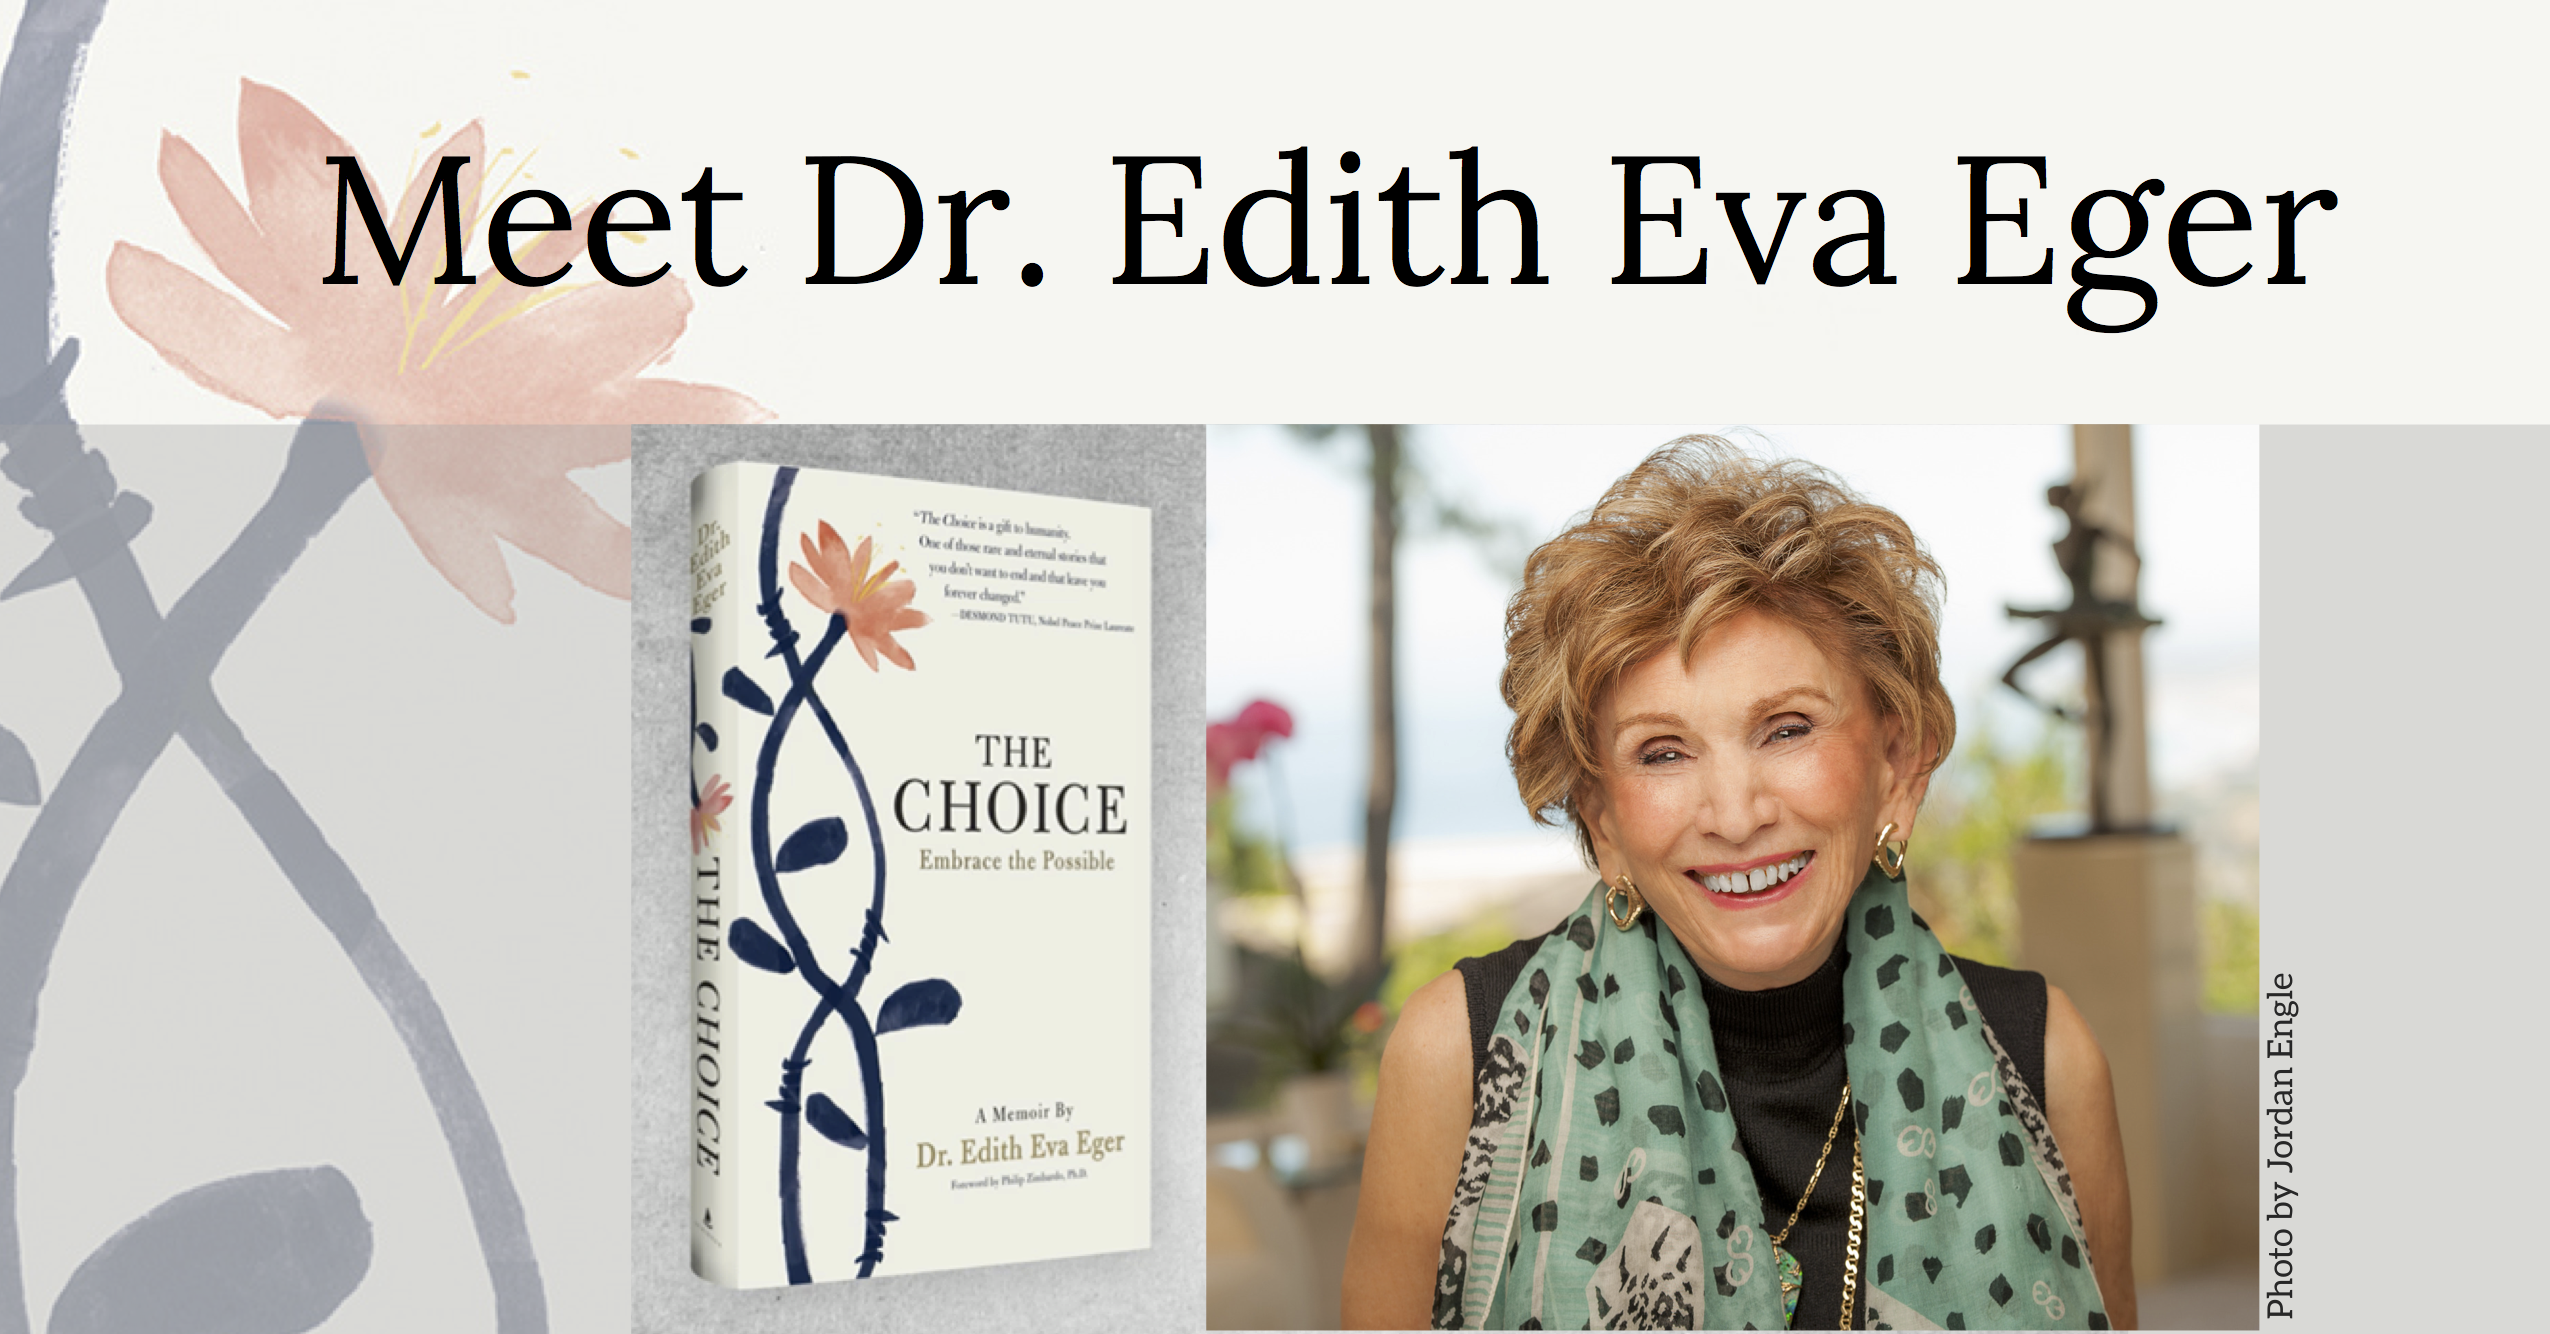 Meet Dr. Edith Eva Eger - Dr. Edith Eger